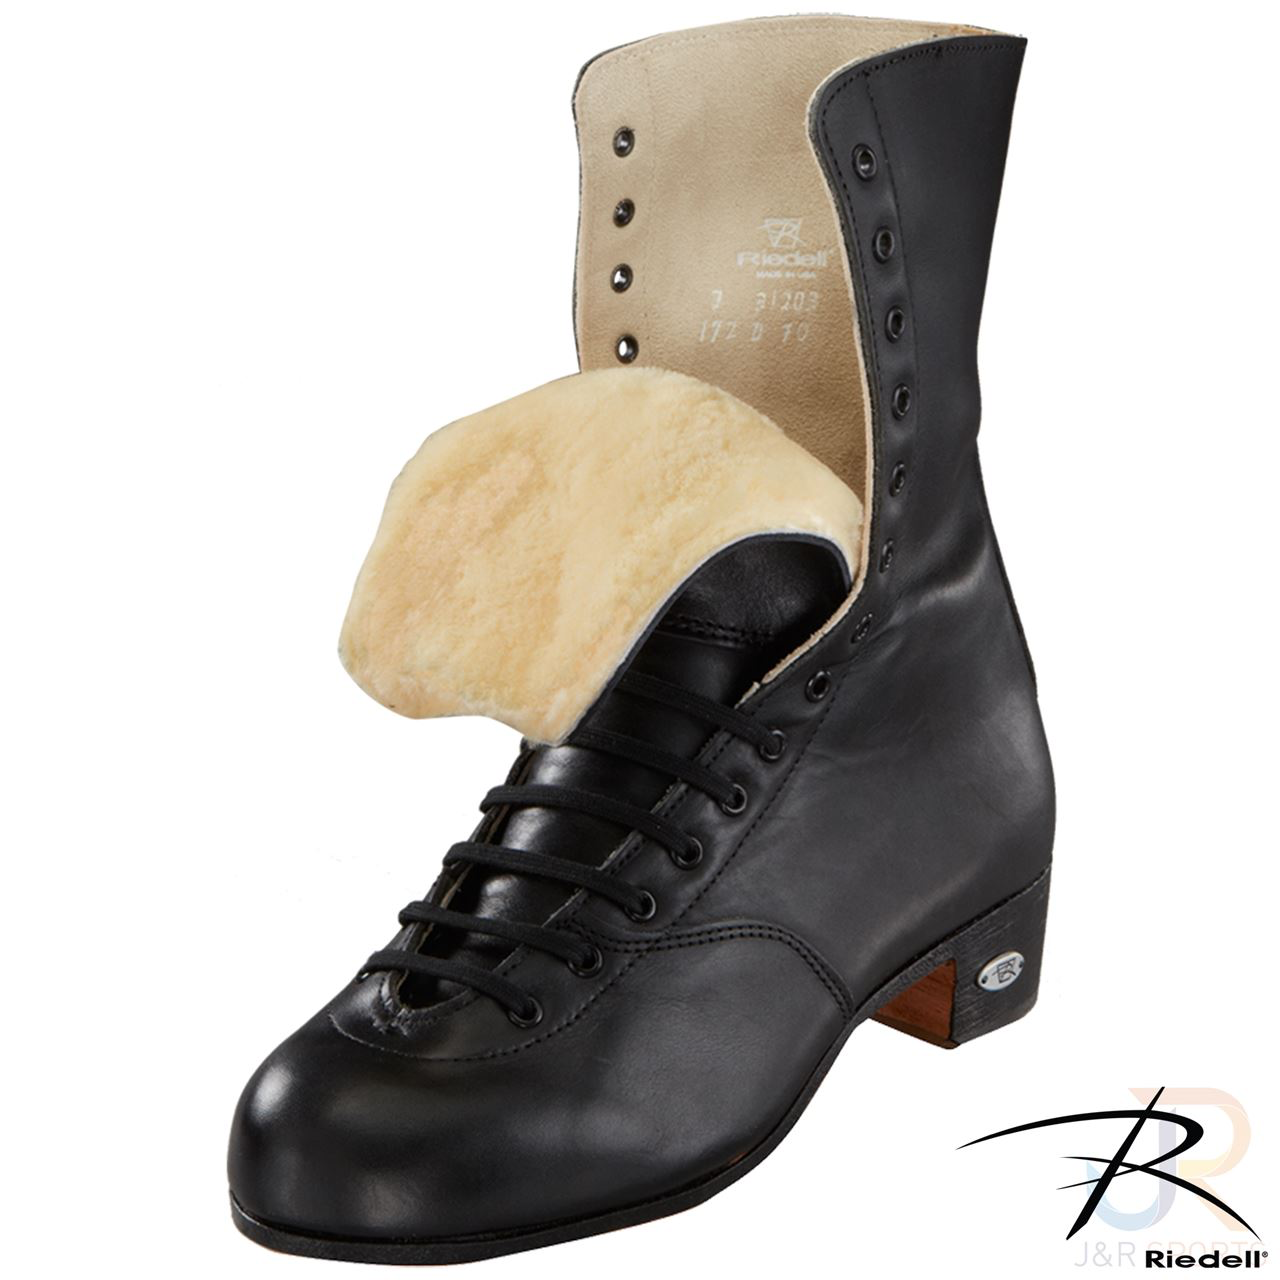 Riedell 172 OG High Top Skate Boots